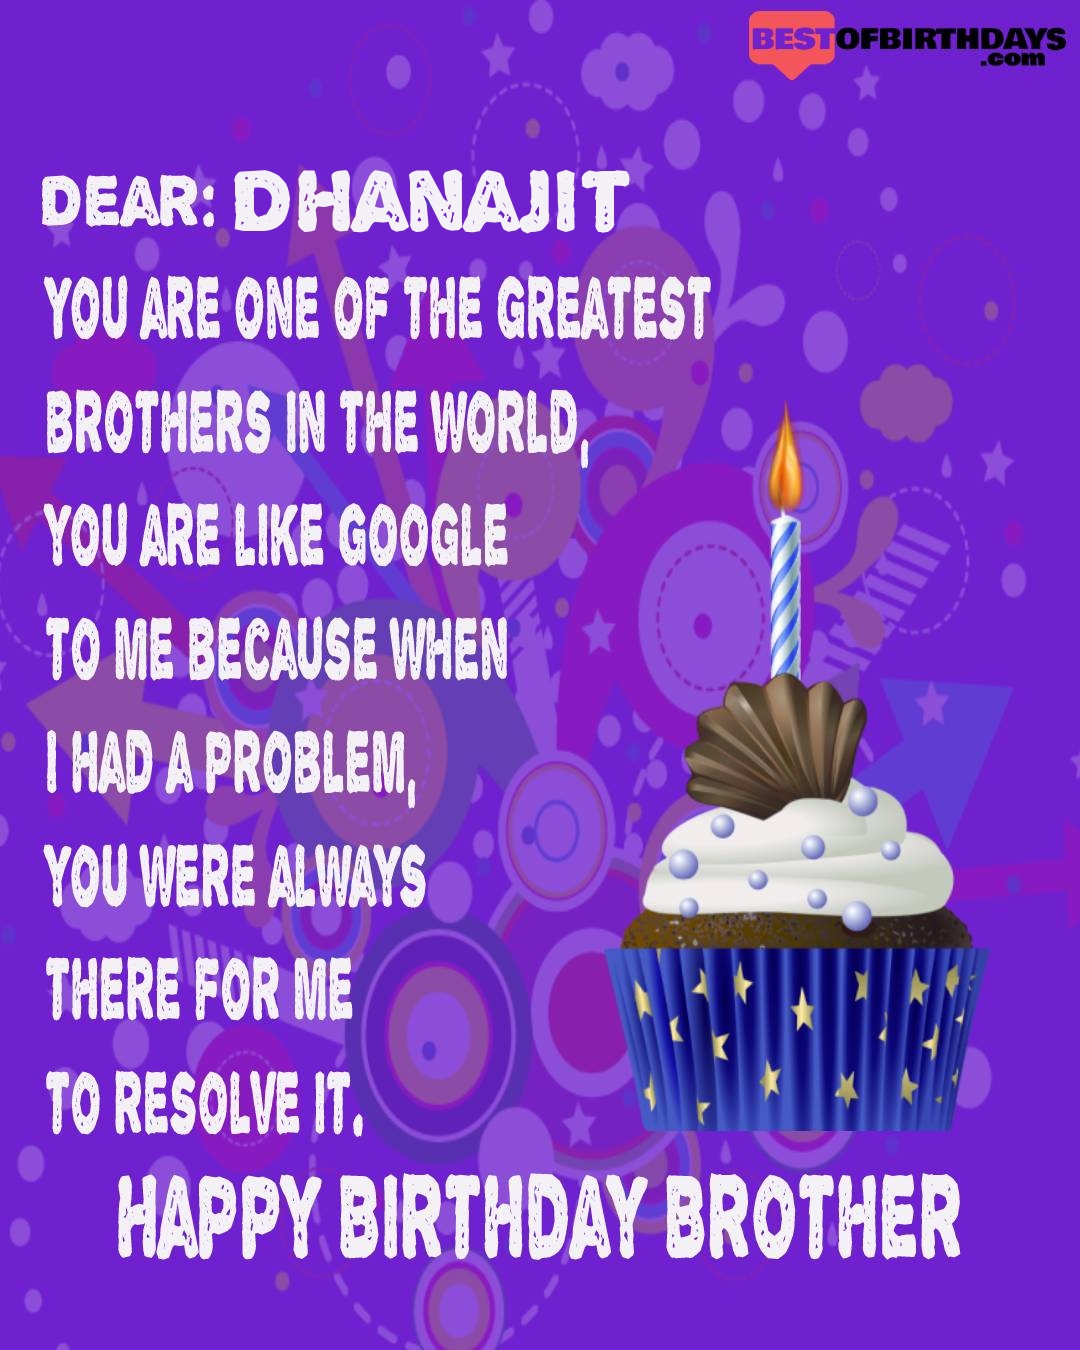 Happy birthday dhanajit bhai brother bro